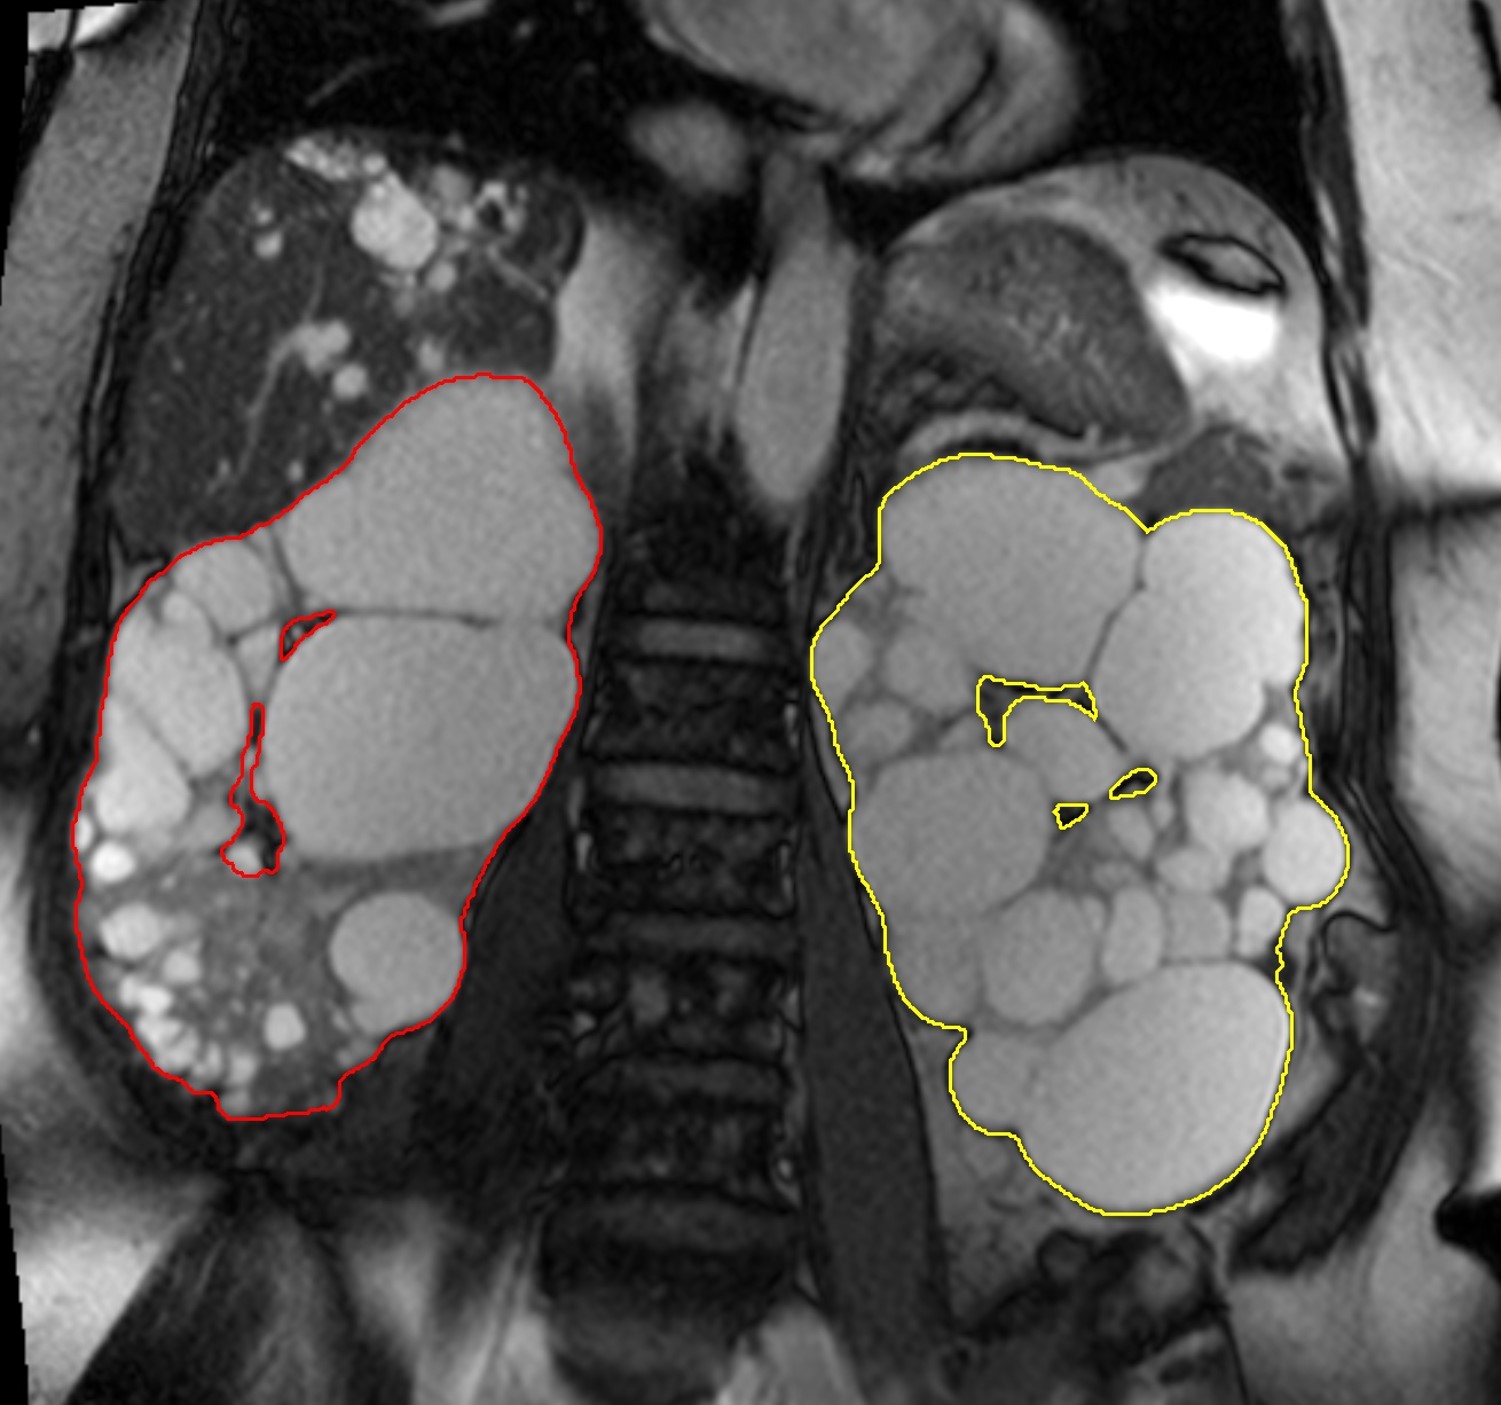 MRI image of abdomen